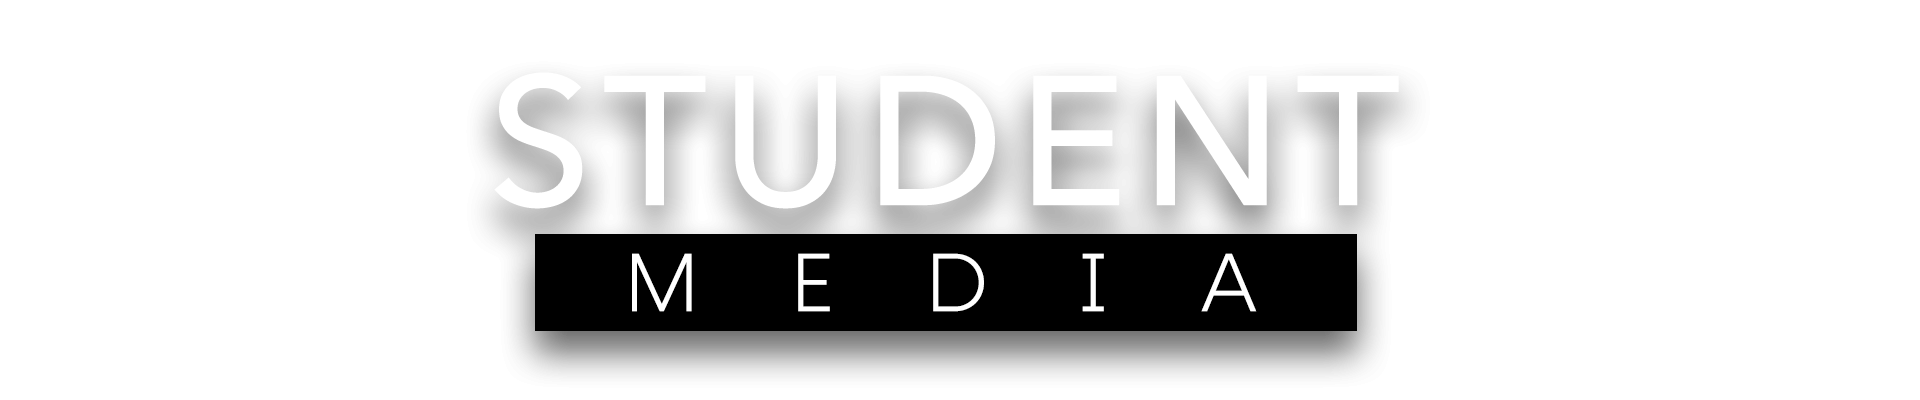 studentmedia_text_header